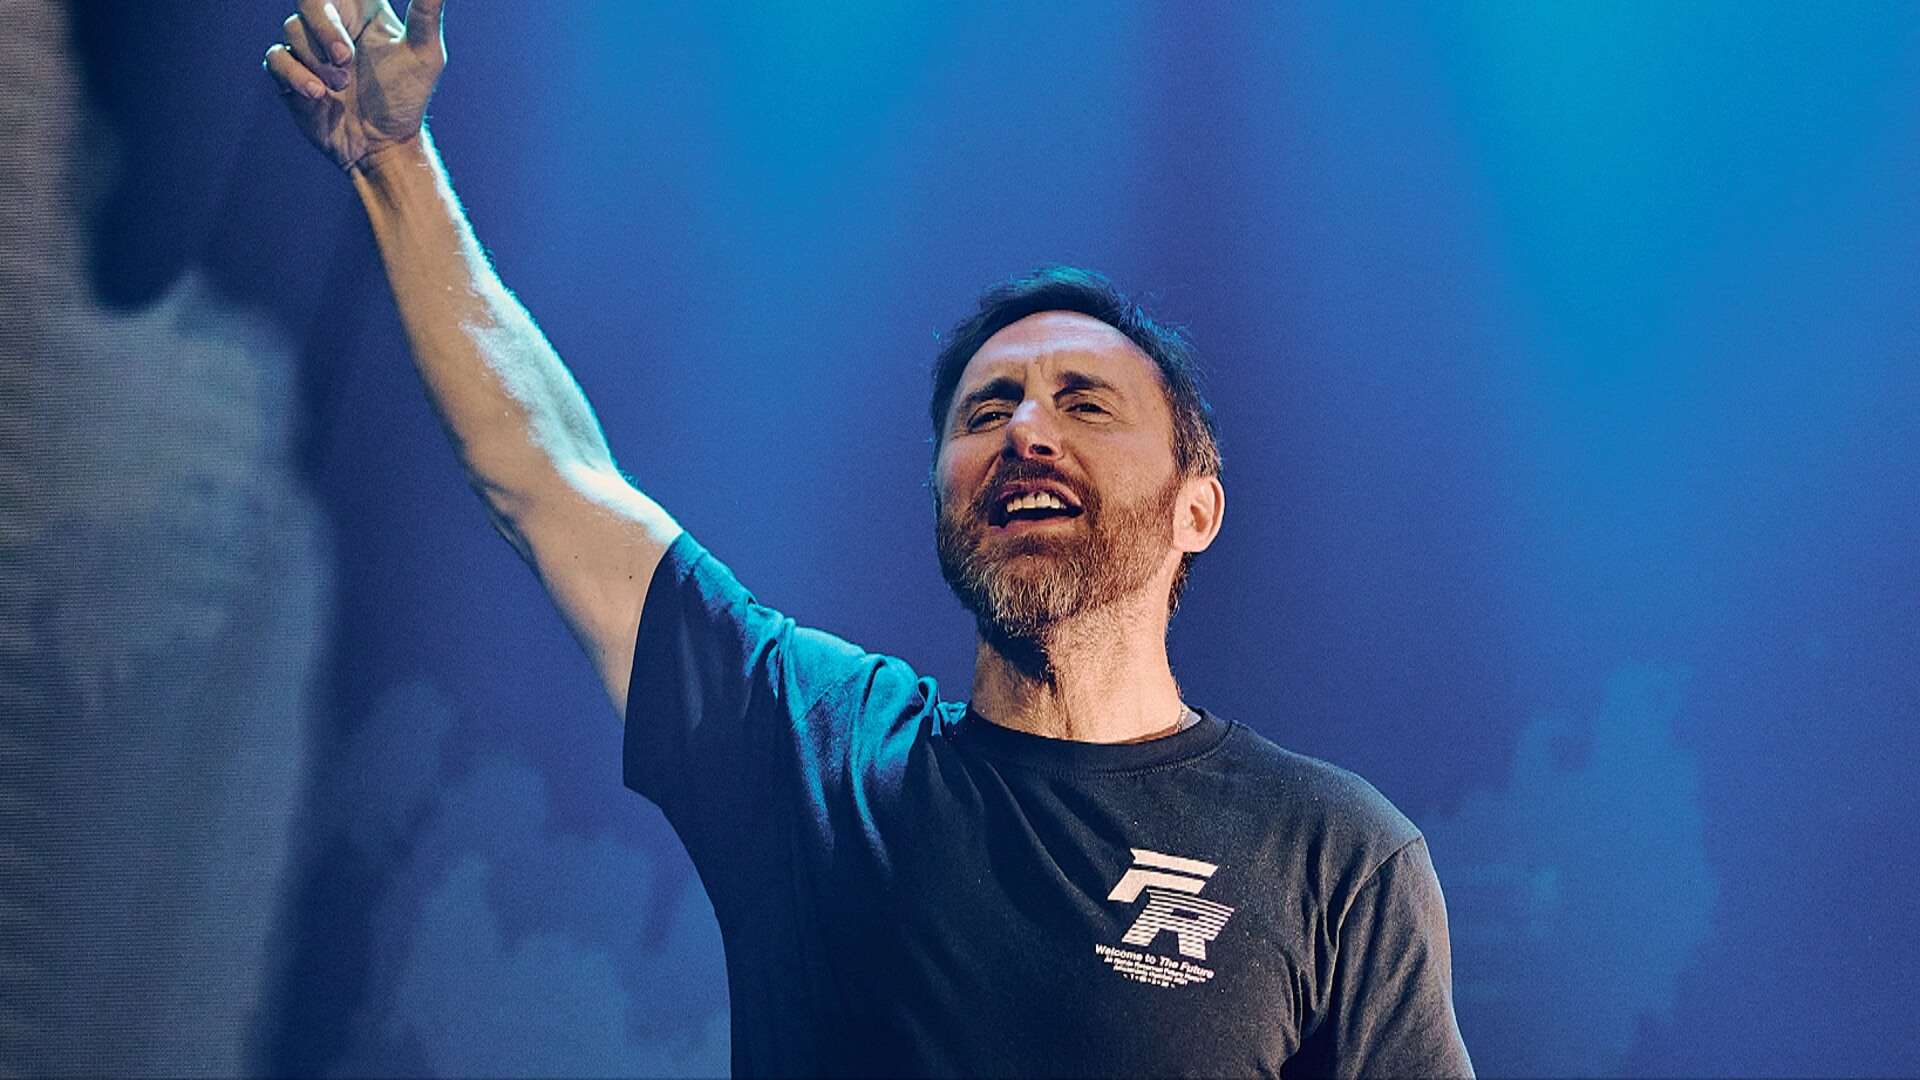 David Guetta uses AI to create edit with Eminem